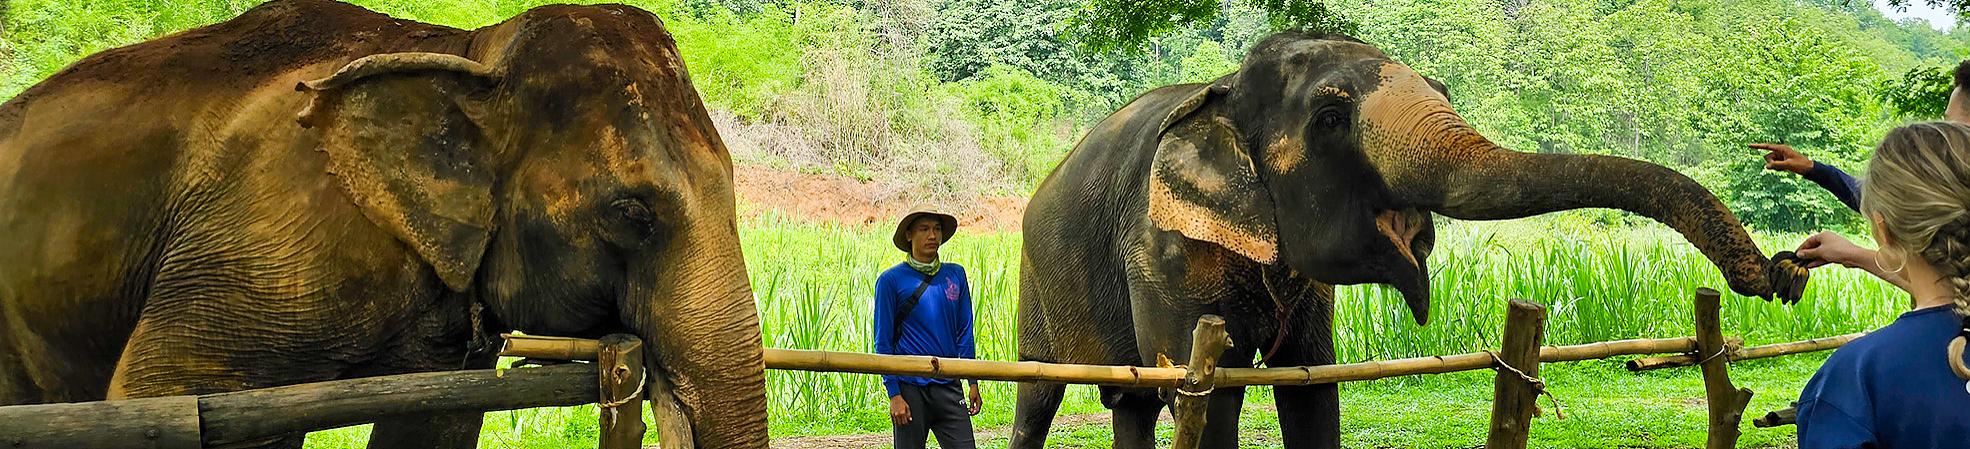 Elephant Park, Thailand